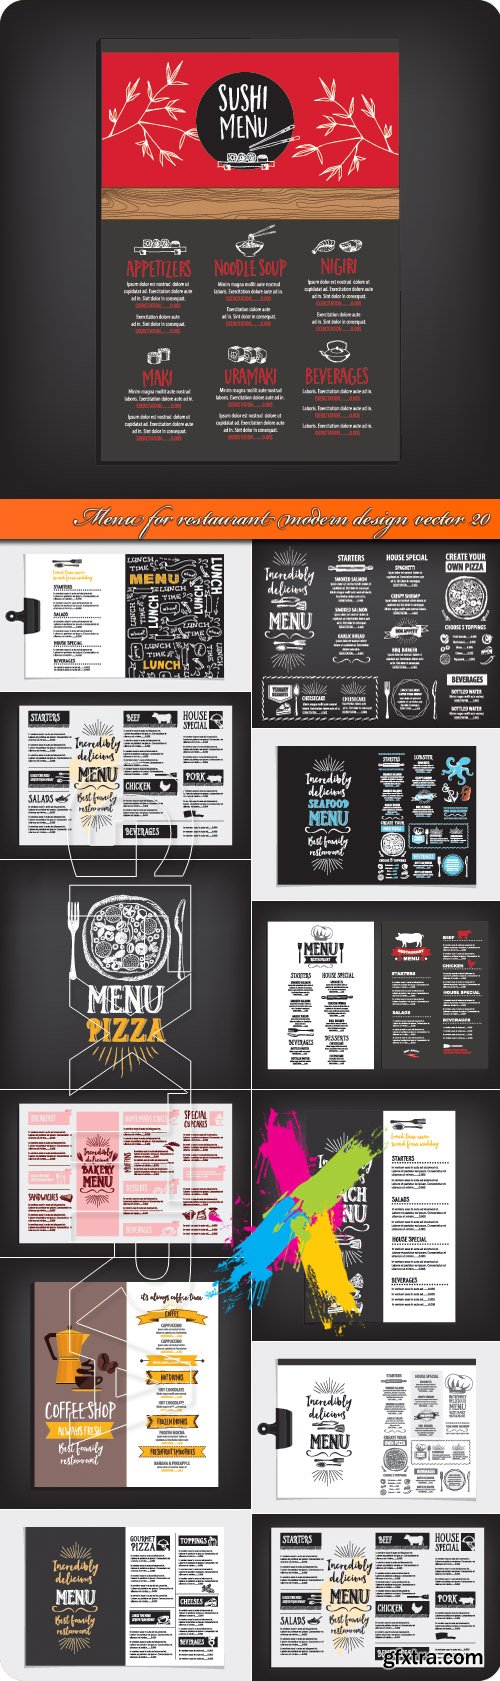 Menu for restaurant modern design vector 20